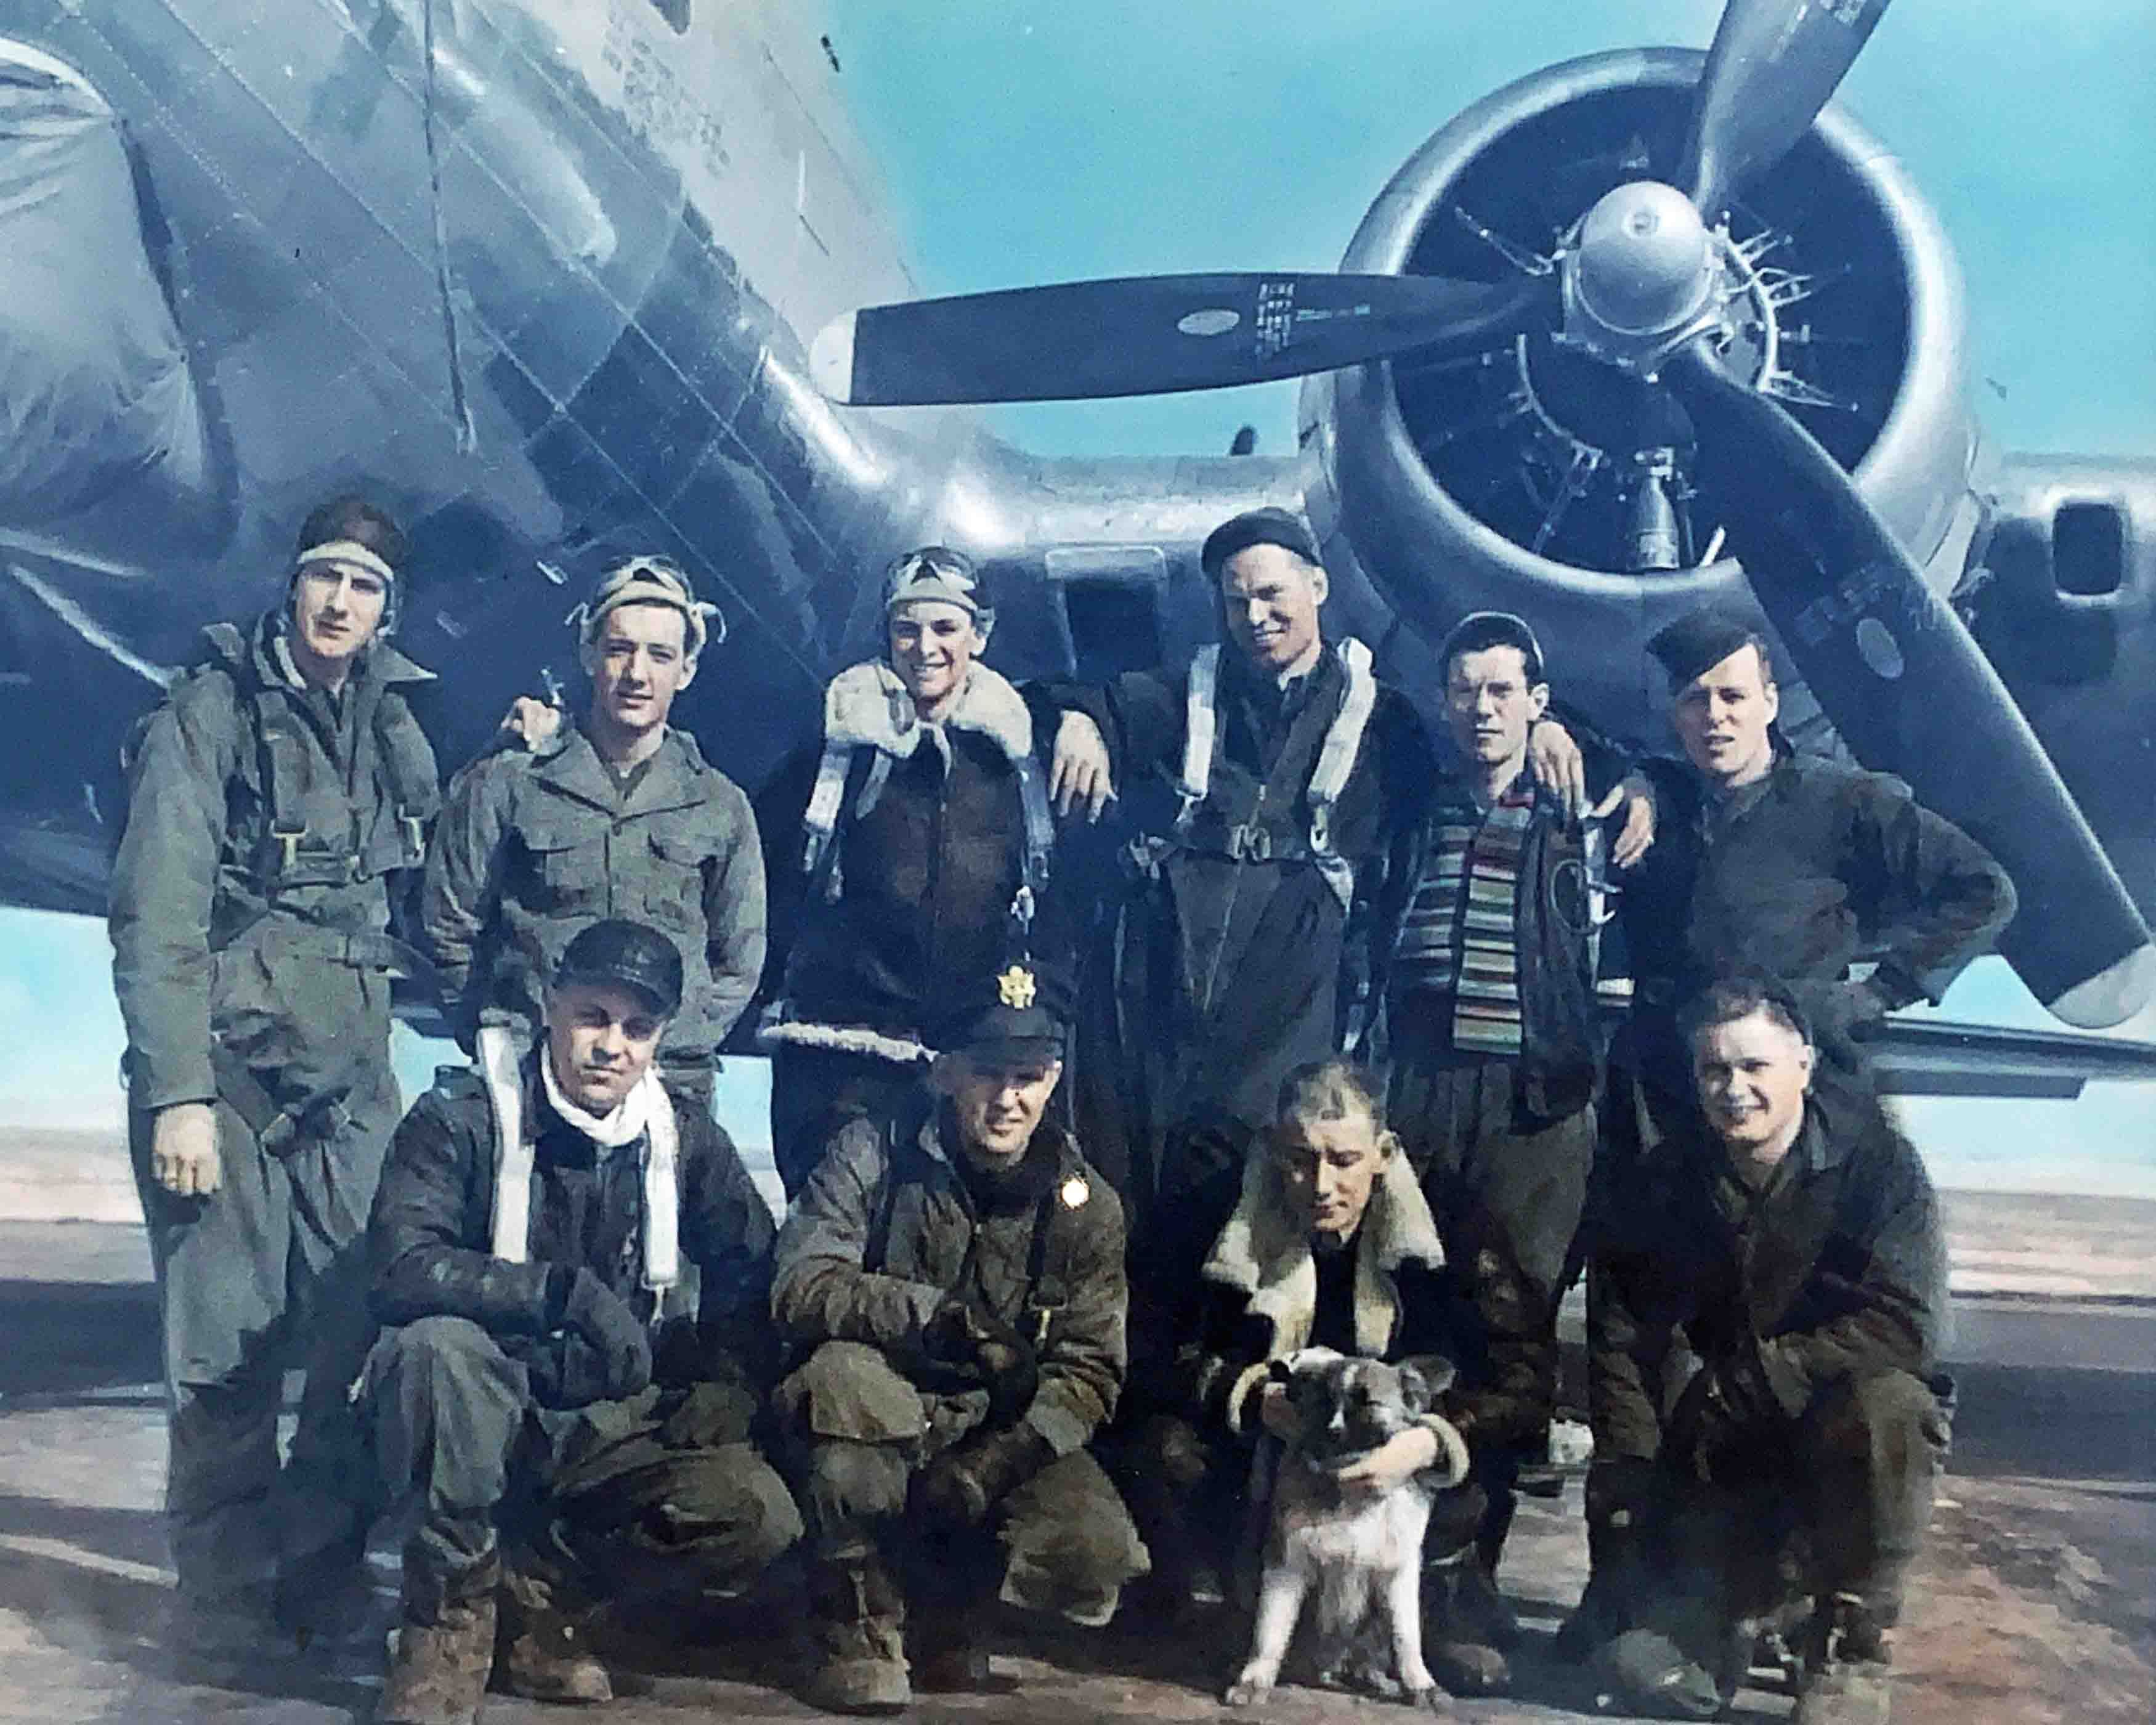 Lassegard's Crew - 603rd Squadron - April 1944